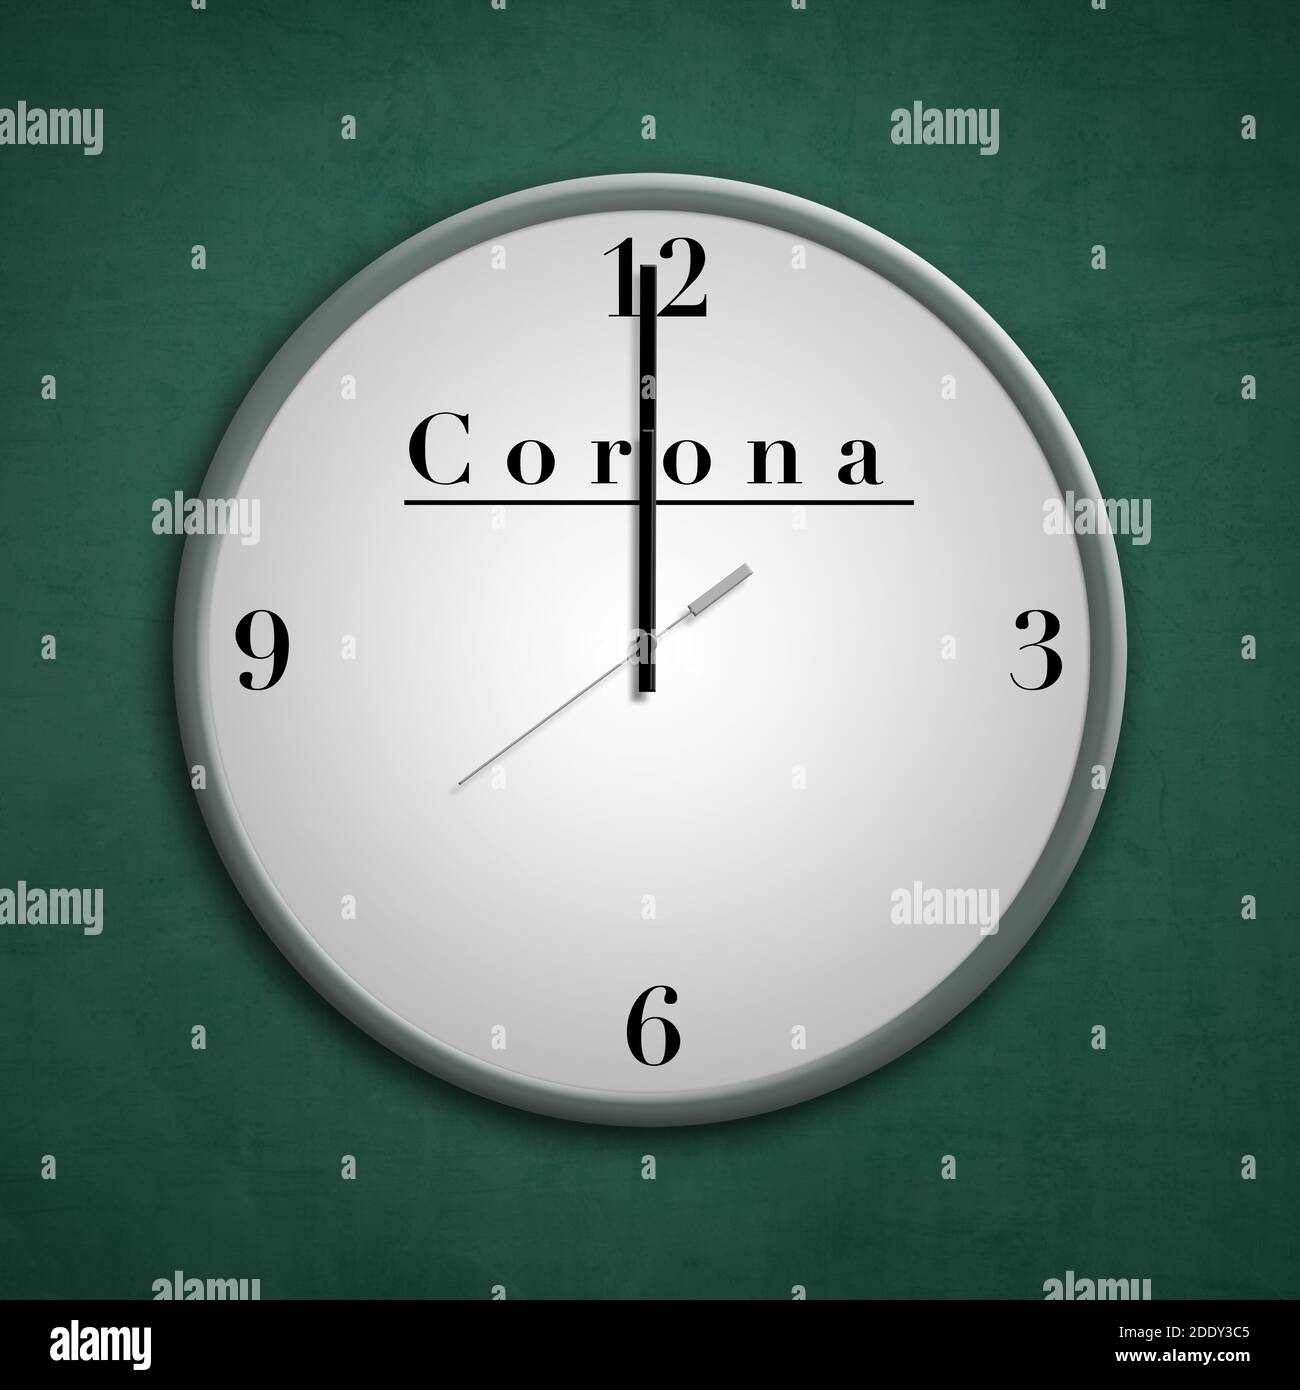 Corona curfew clock at 12 o clock hanging on green wall Stock Photo